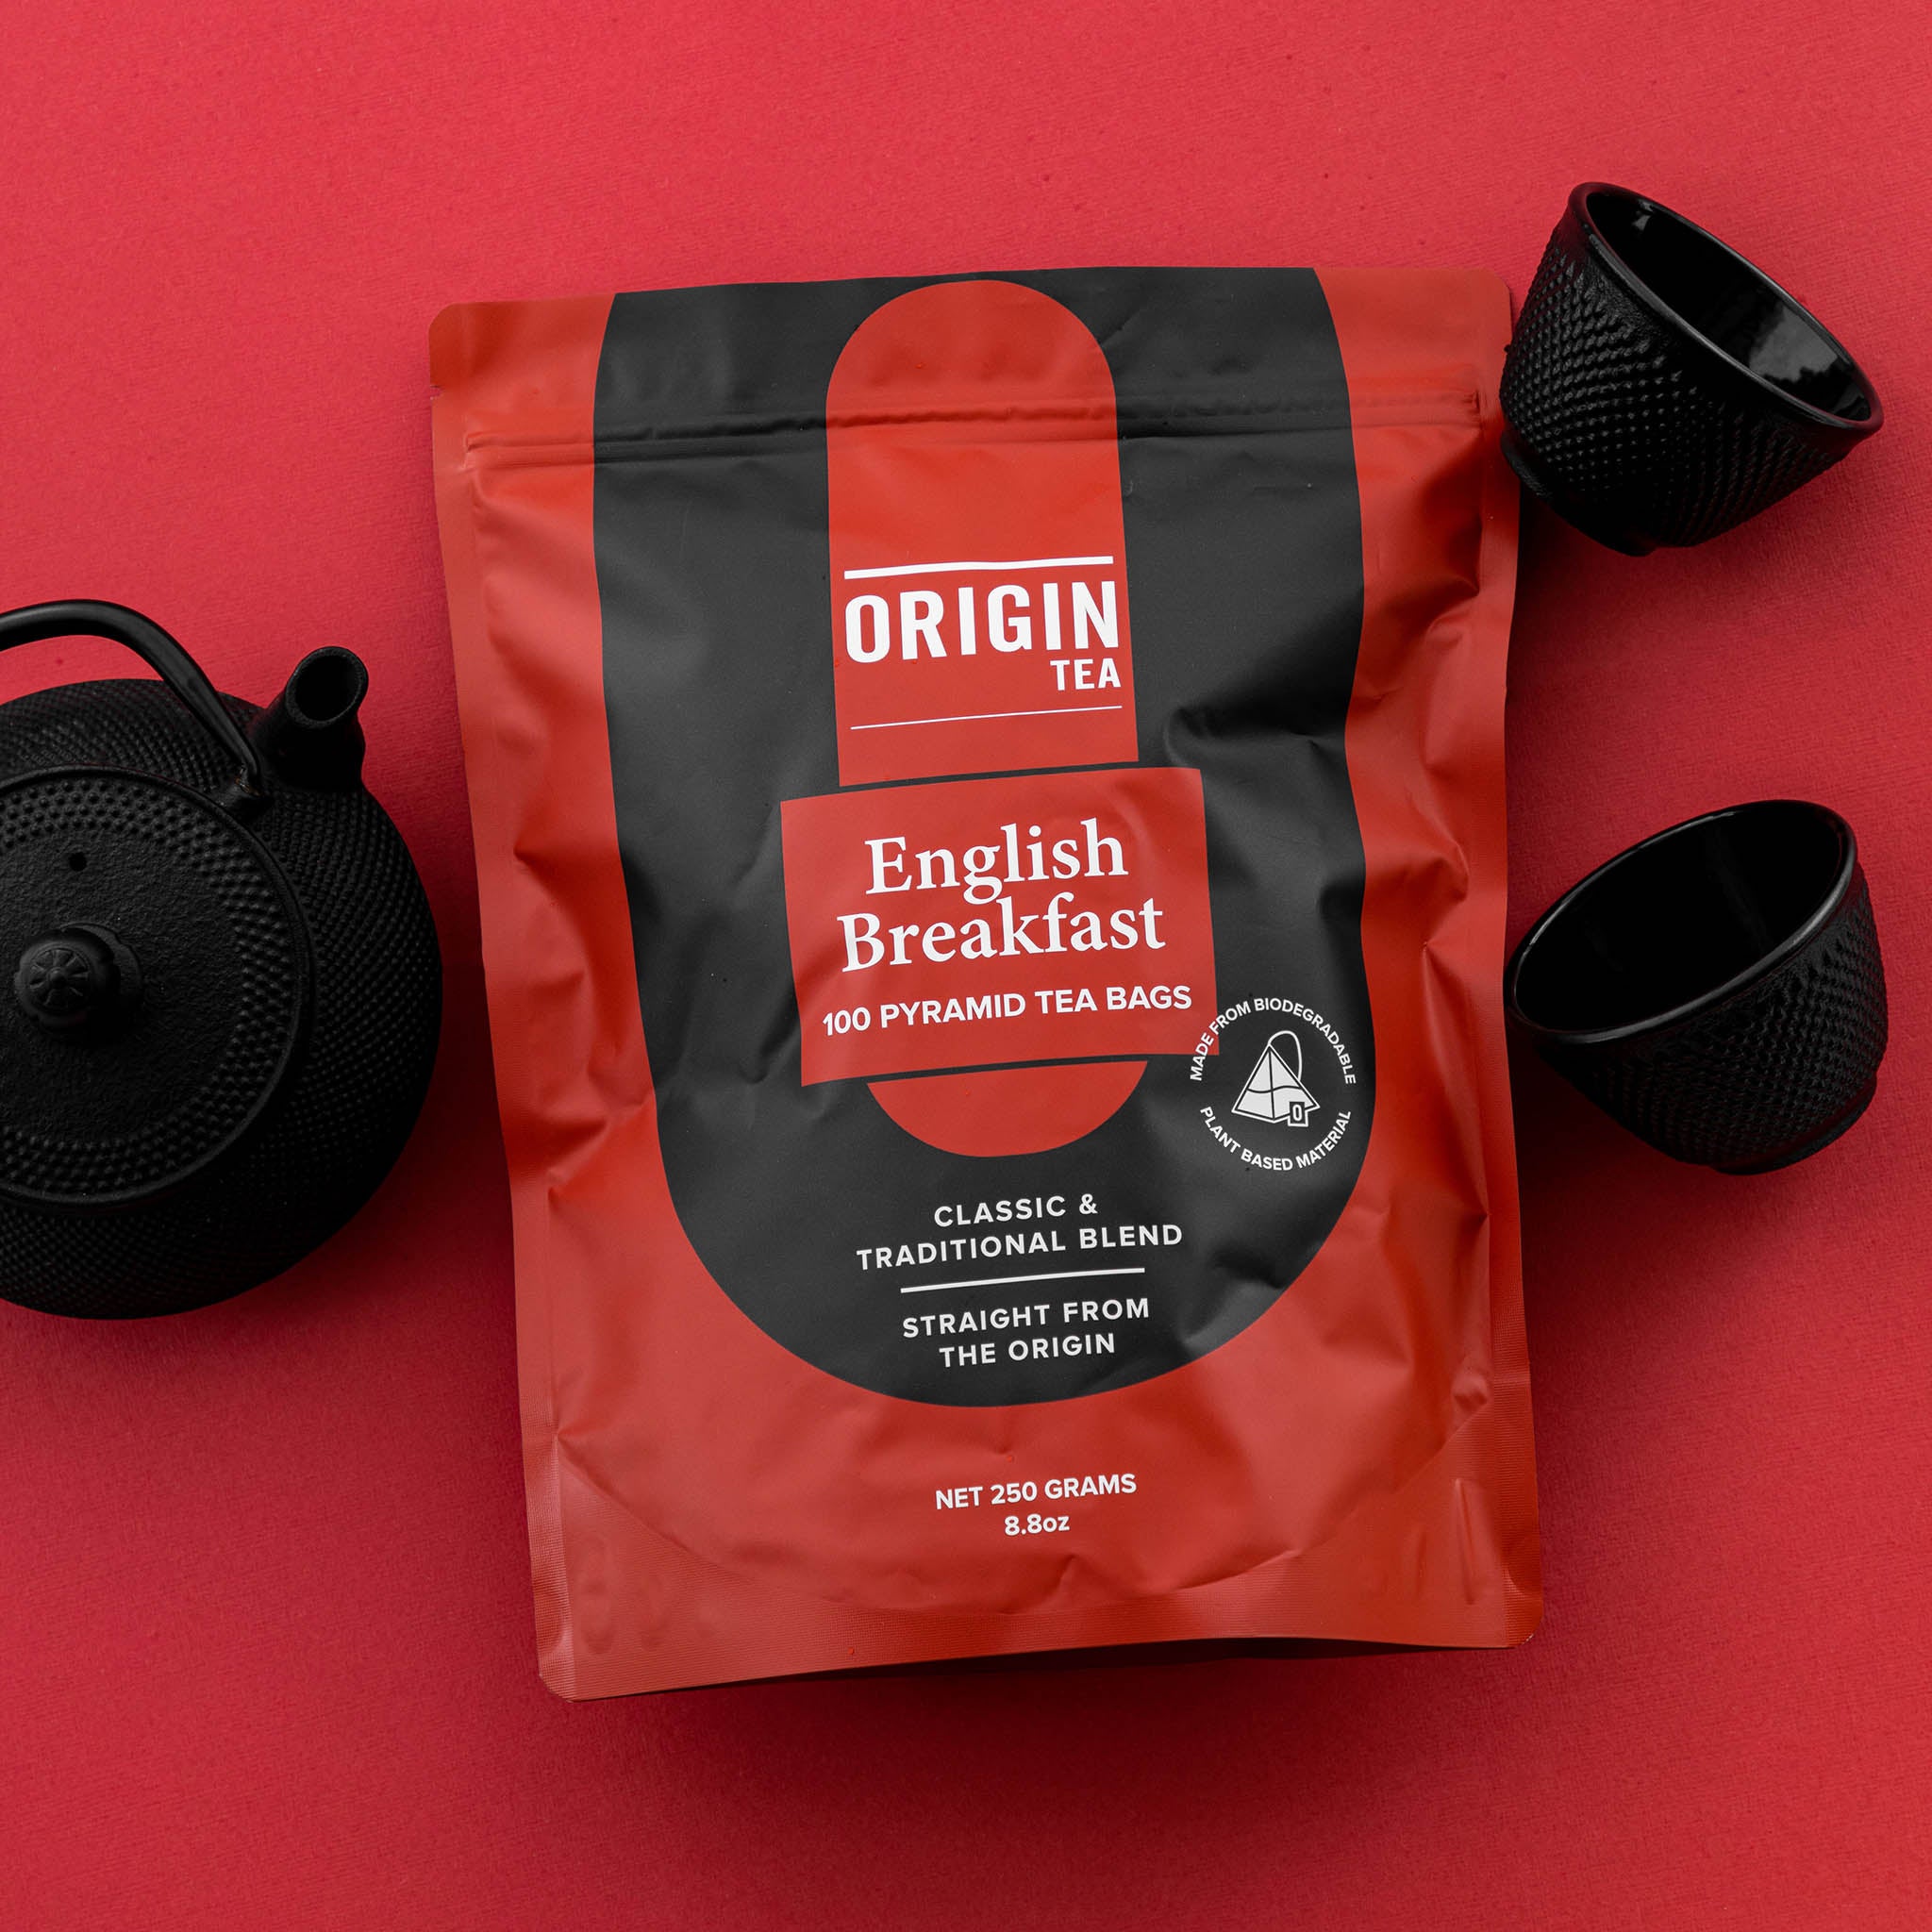 English Breakfast Pyramid Tea Bags - Origin Tea